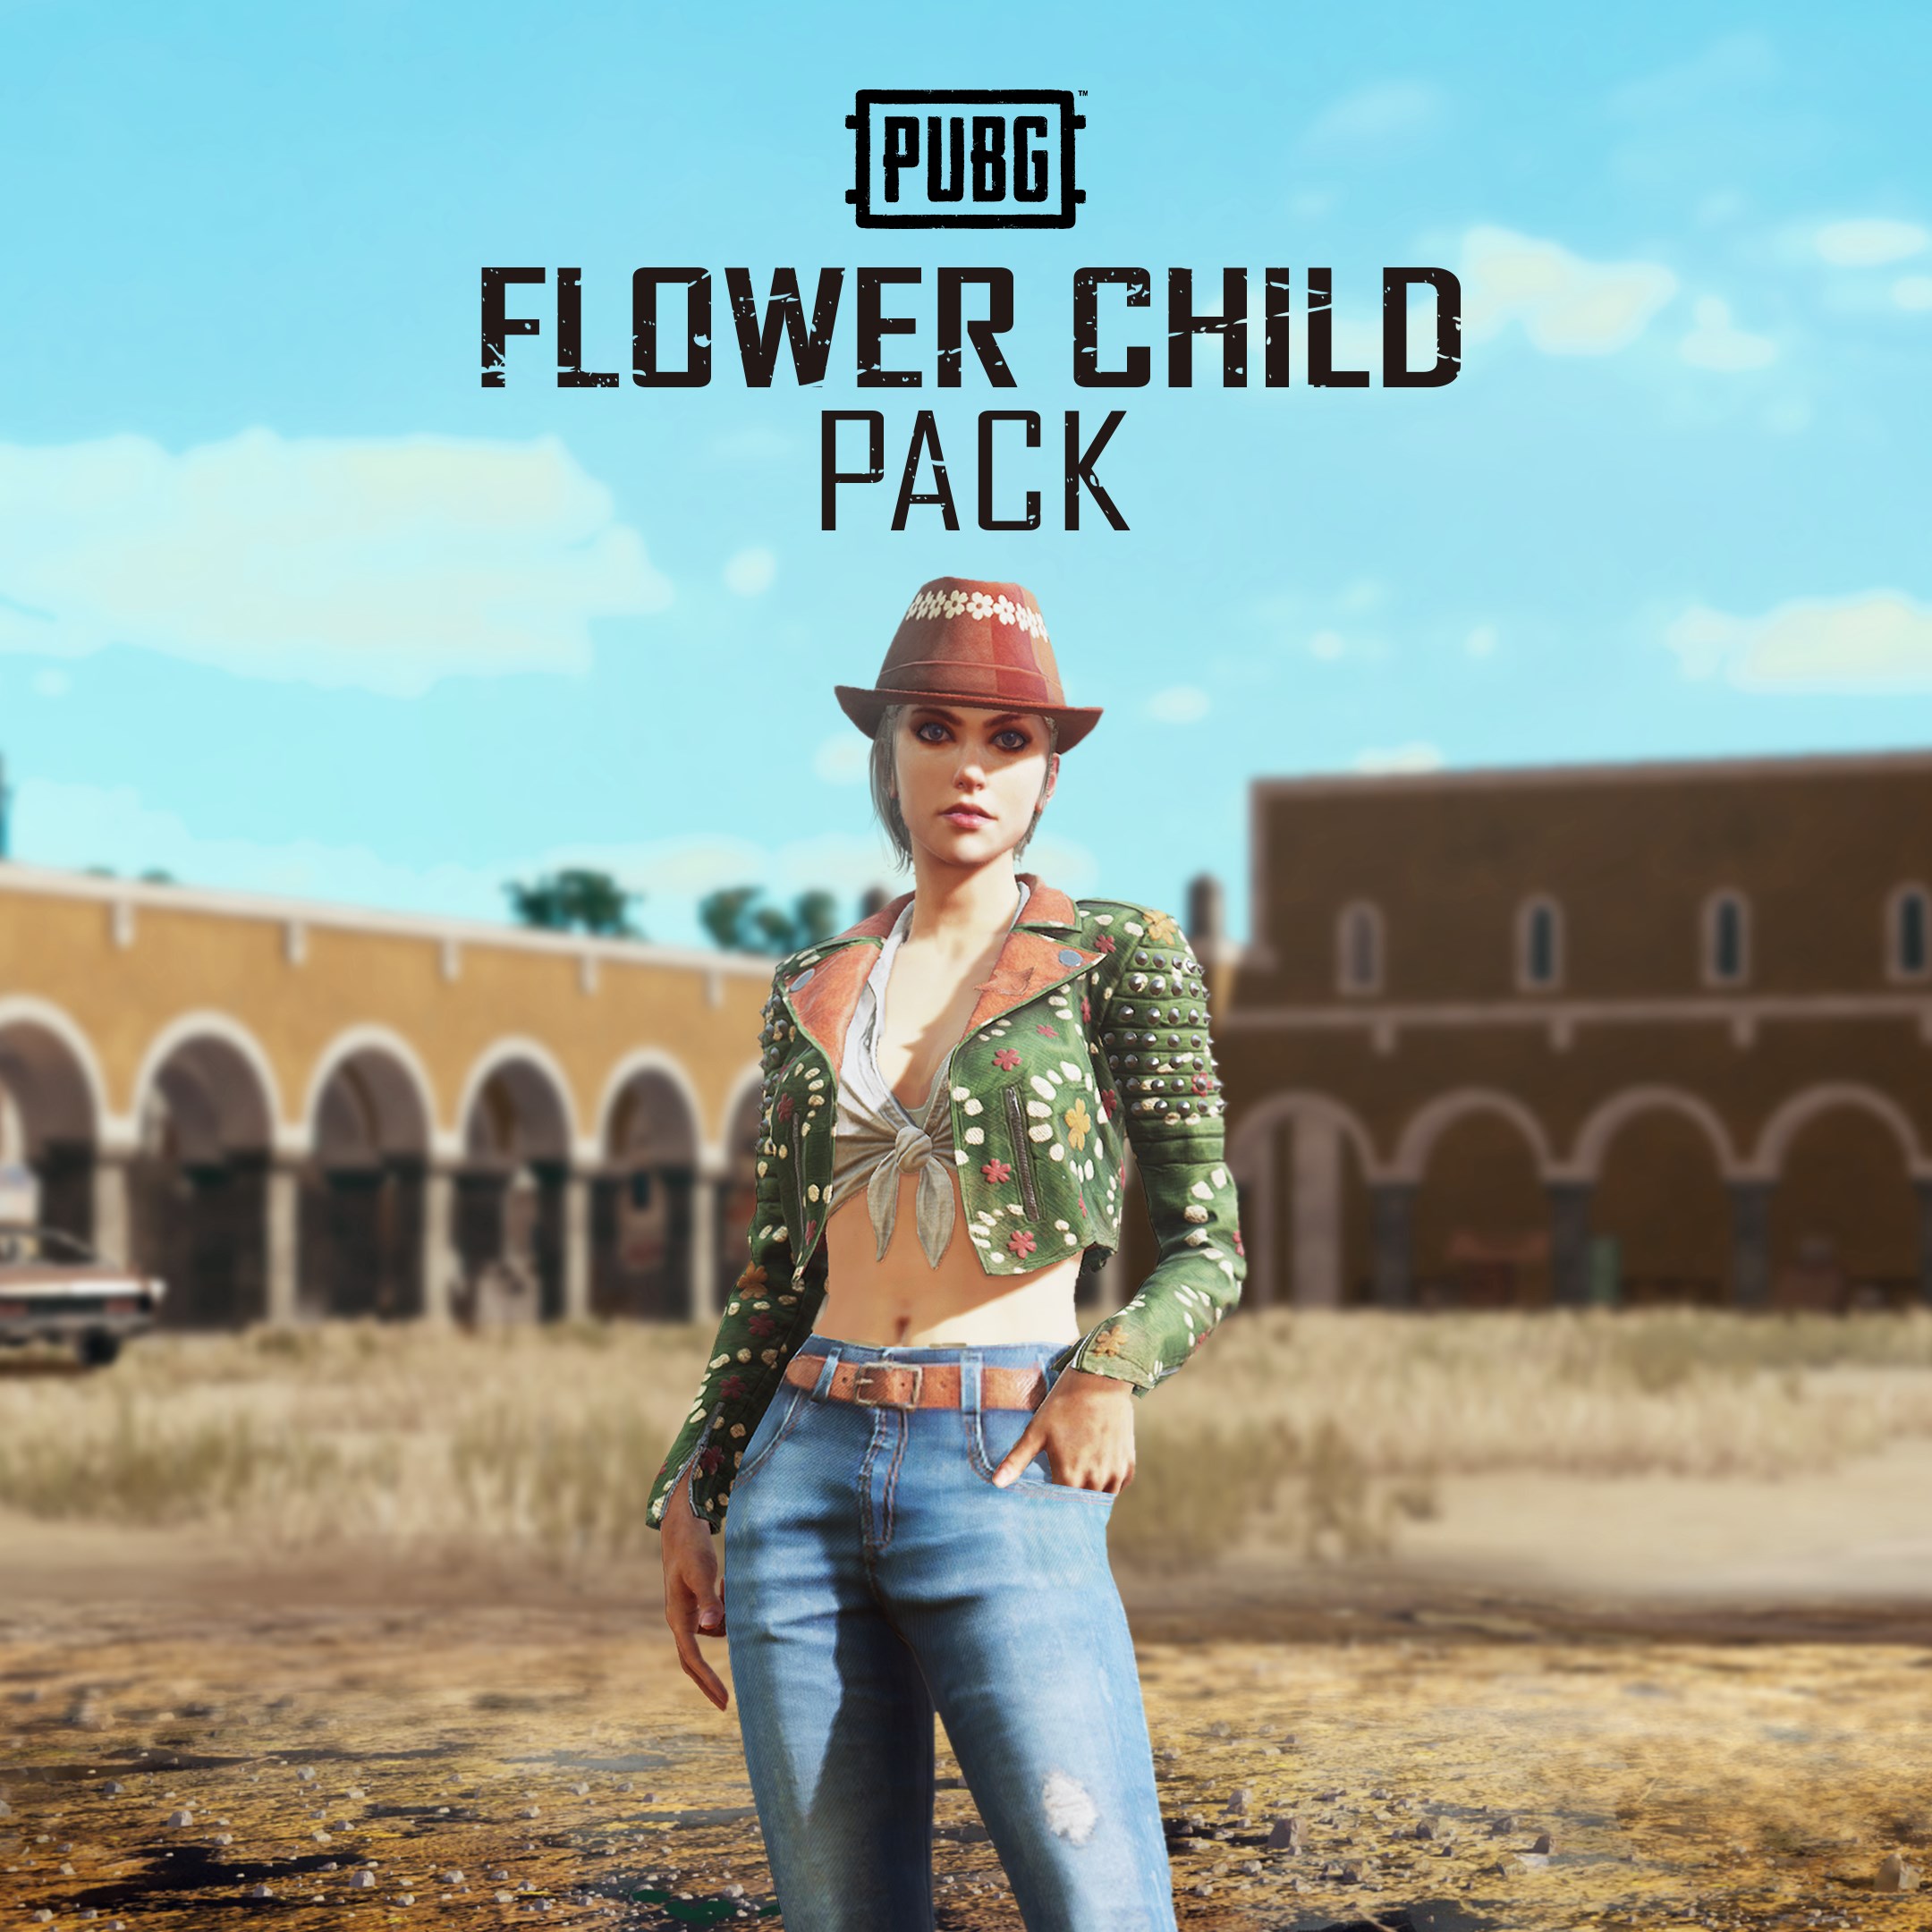 PUBG – Flower Child Pack